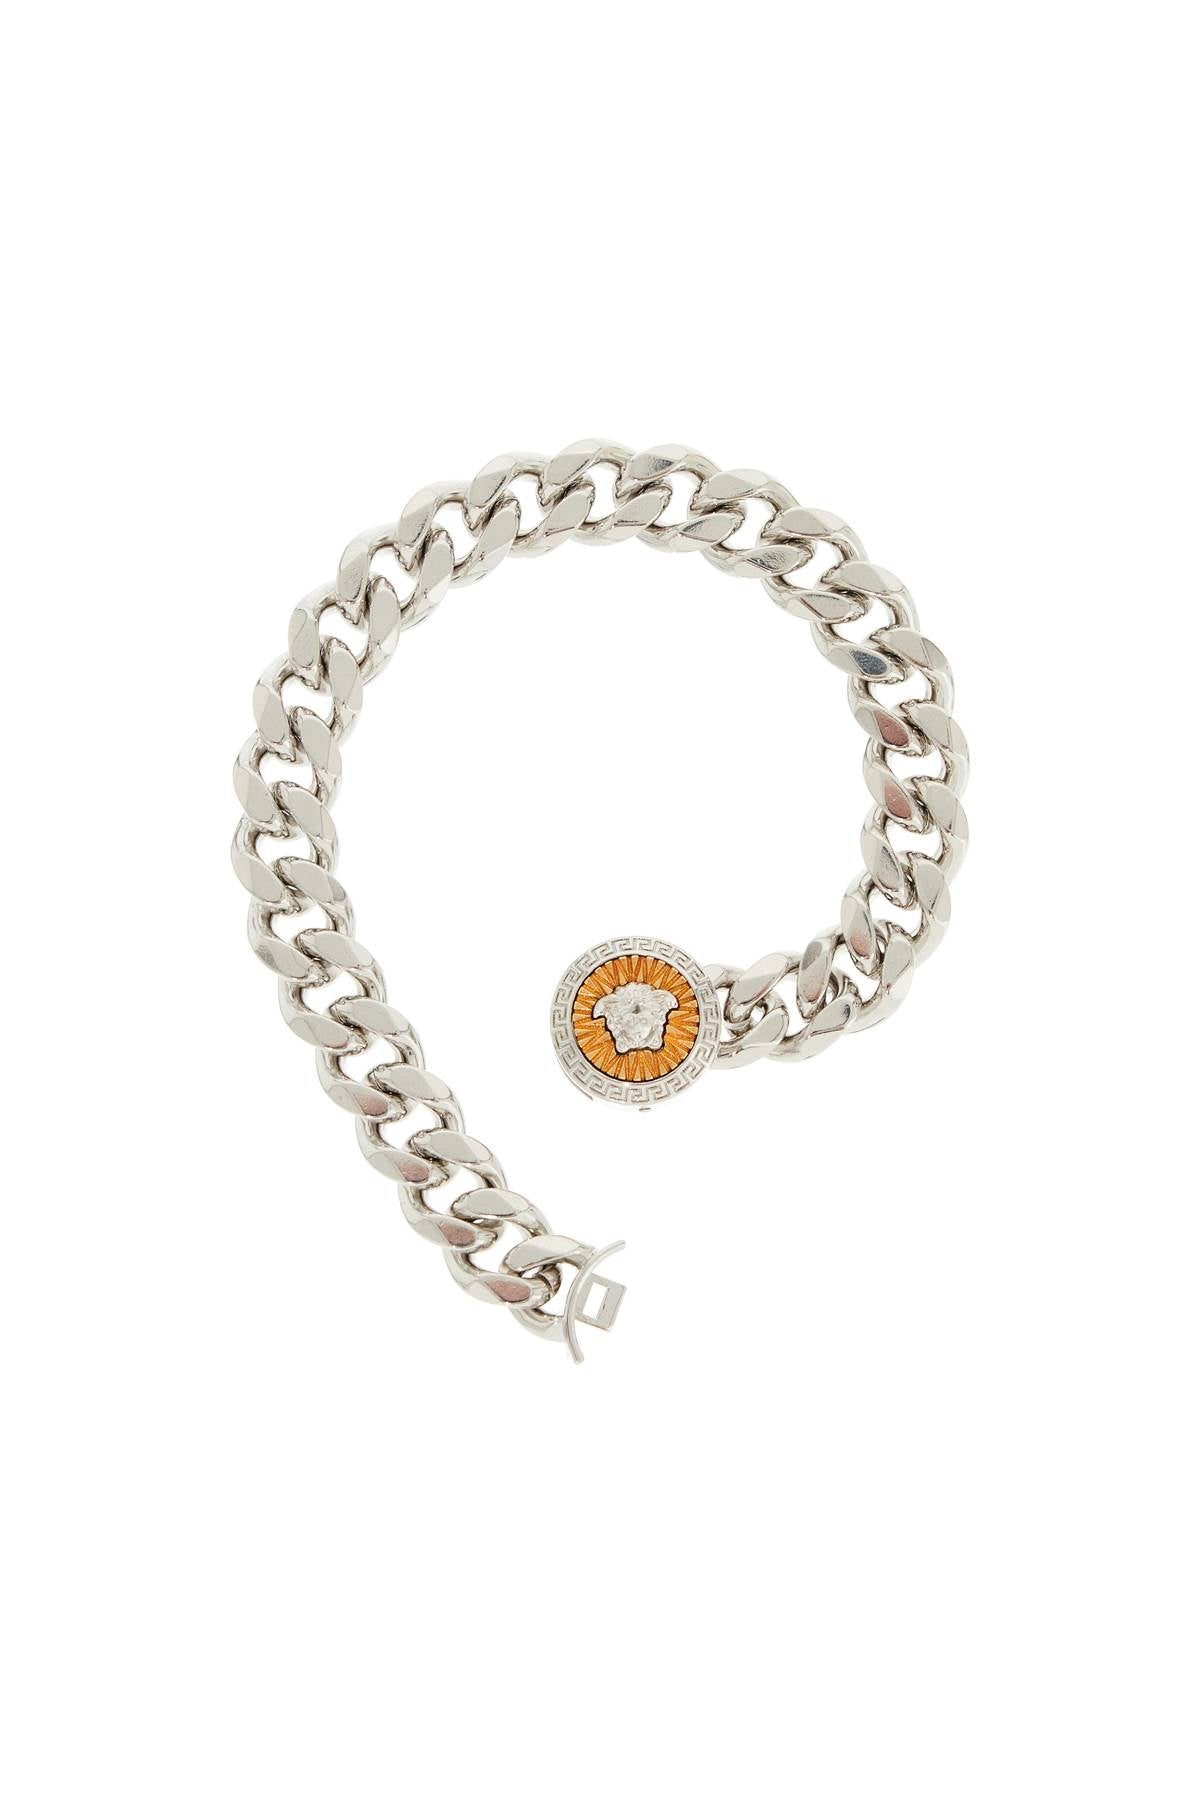 Versace "chain bracelet with medusa charm - Silver